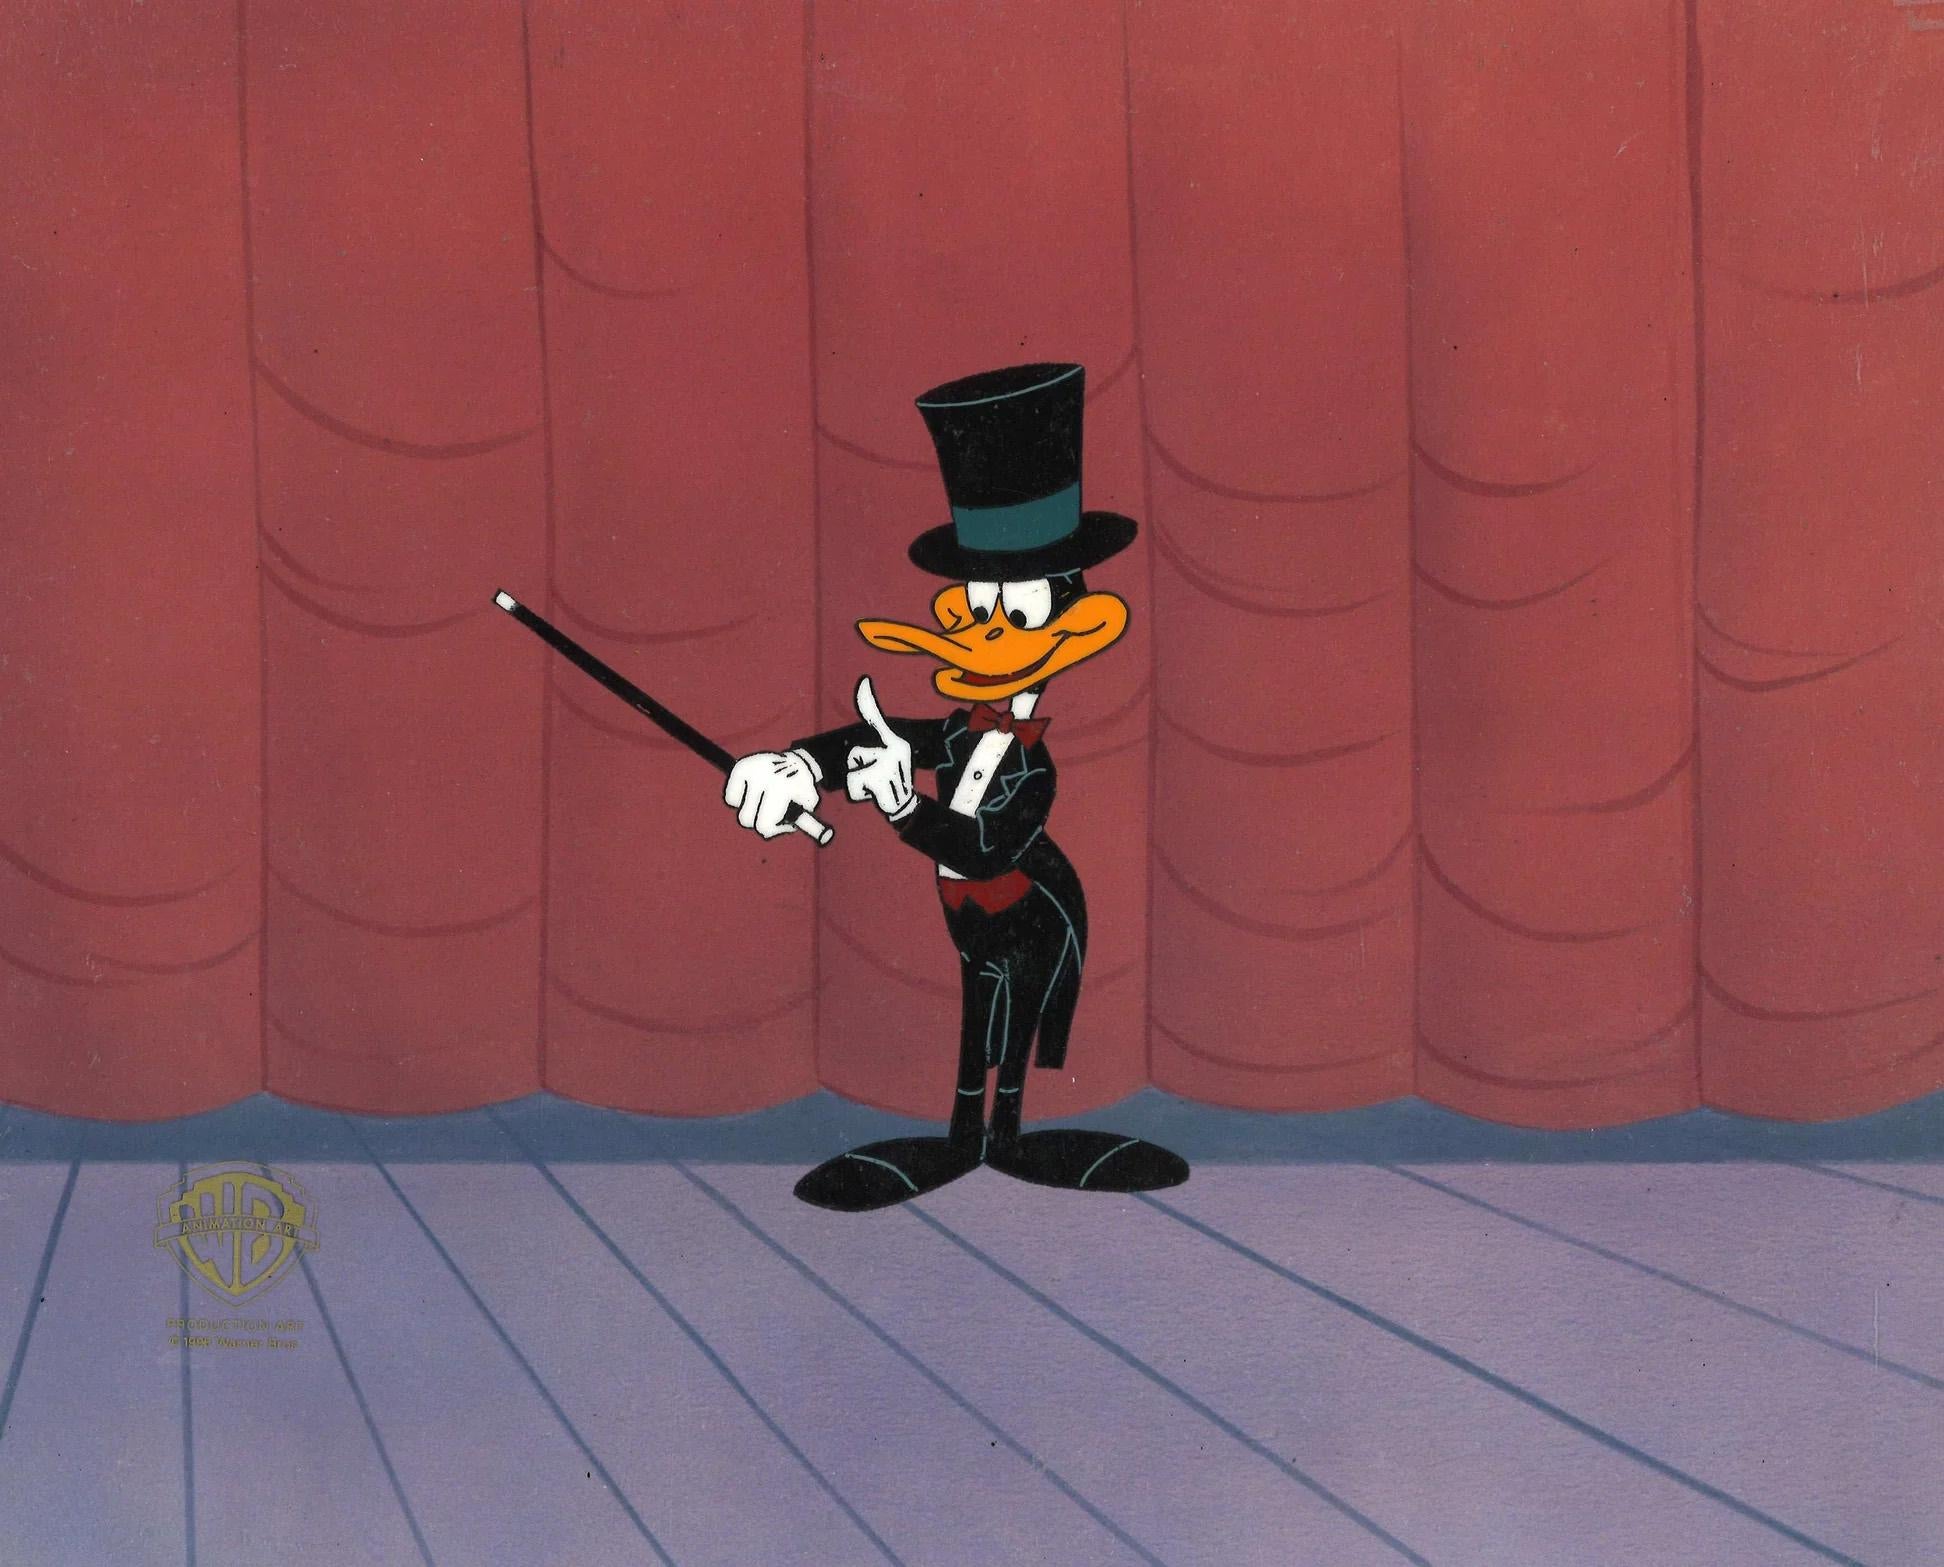 Looney Tunes Original Production Cel: Daffy Tuxedo - Art by Looney Tunes Studio Artists